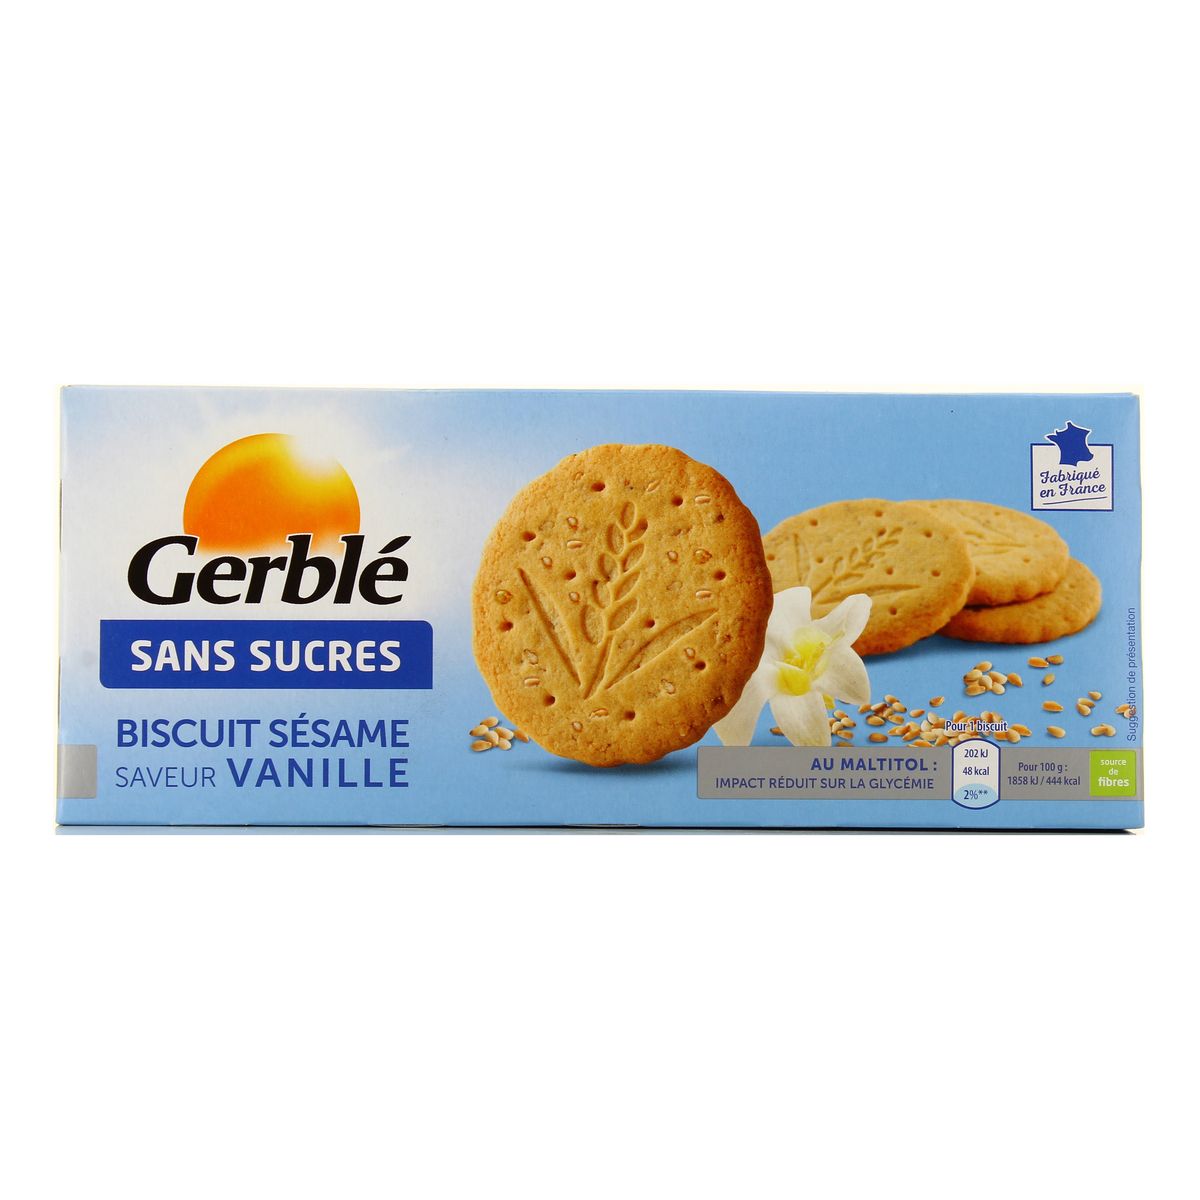 Achat Vente Gerble Biscuit Sesame Saveur Vanille Sans Sucres 132g